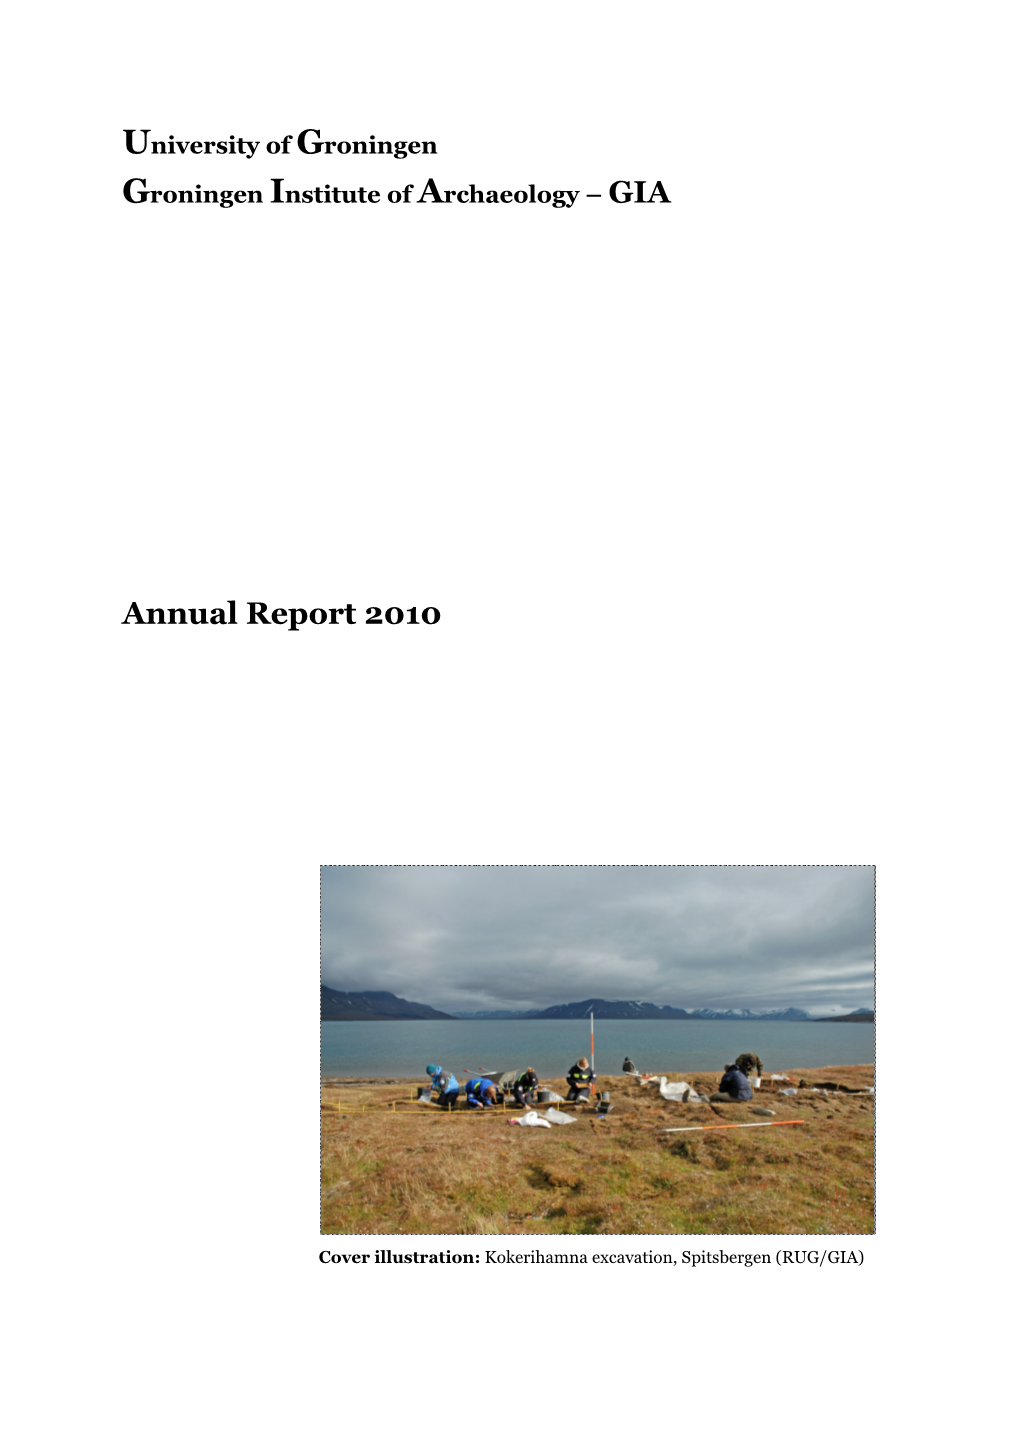 Annual Report GIA 2010